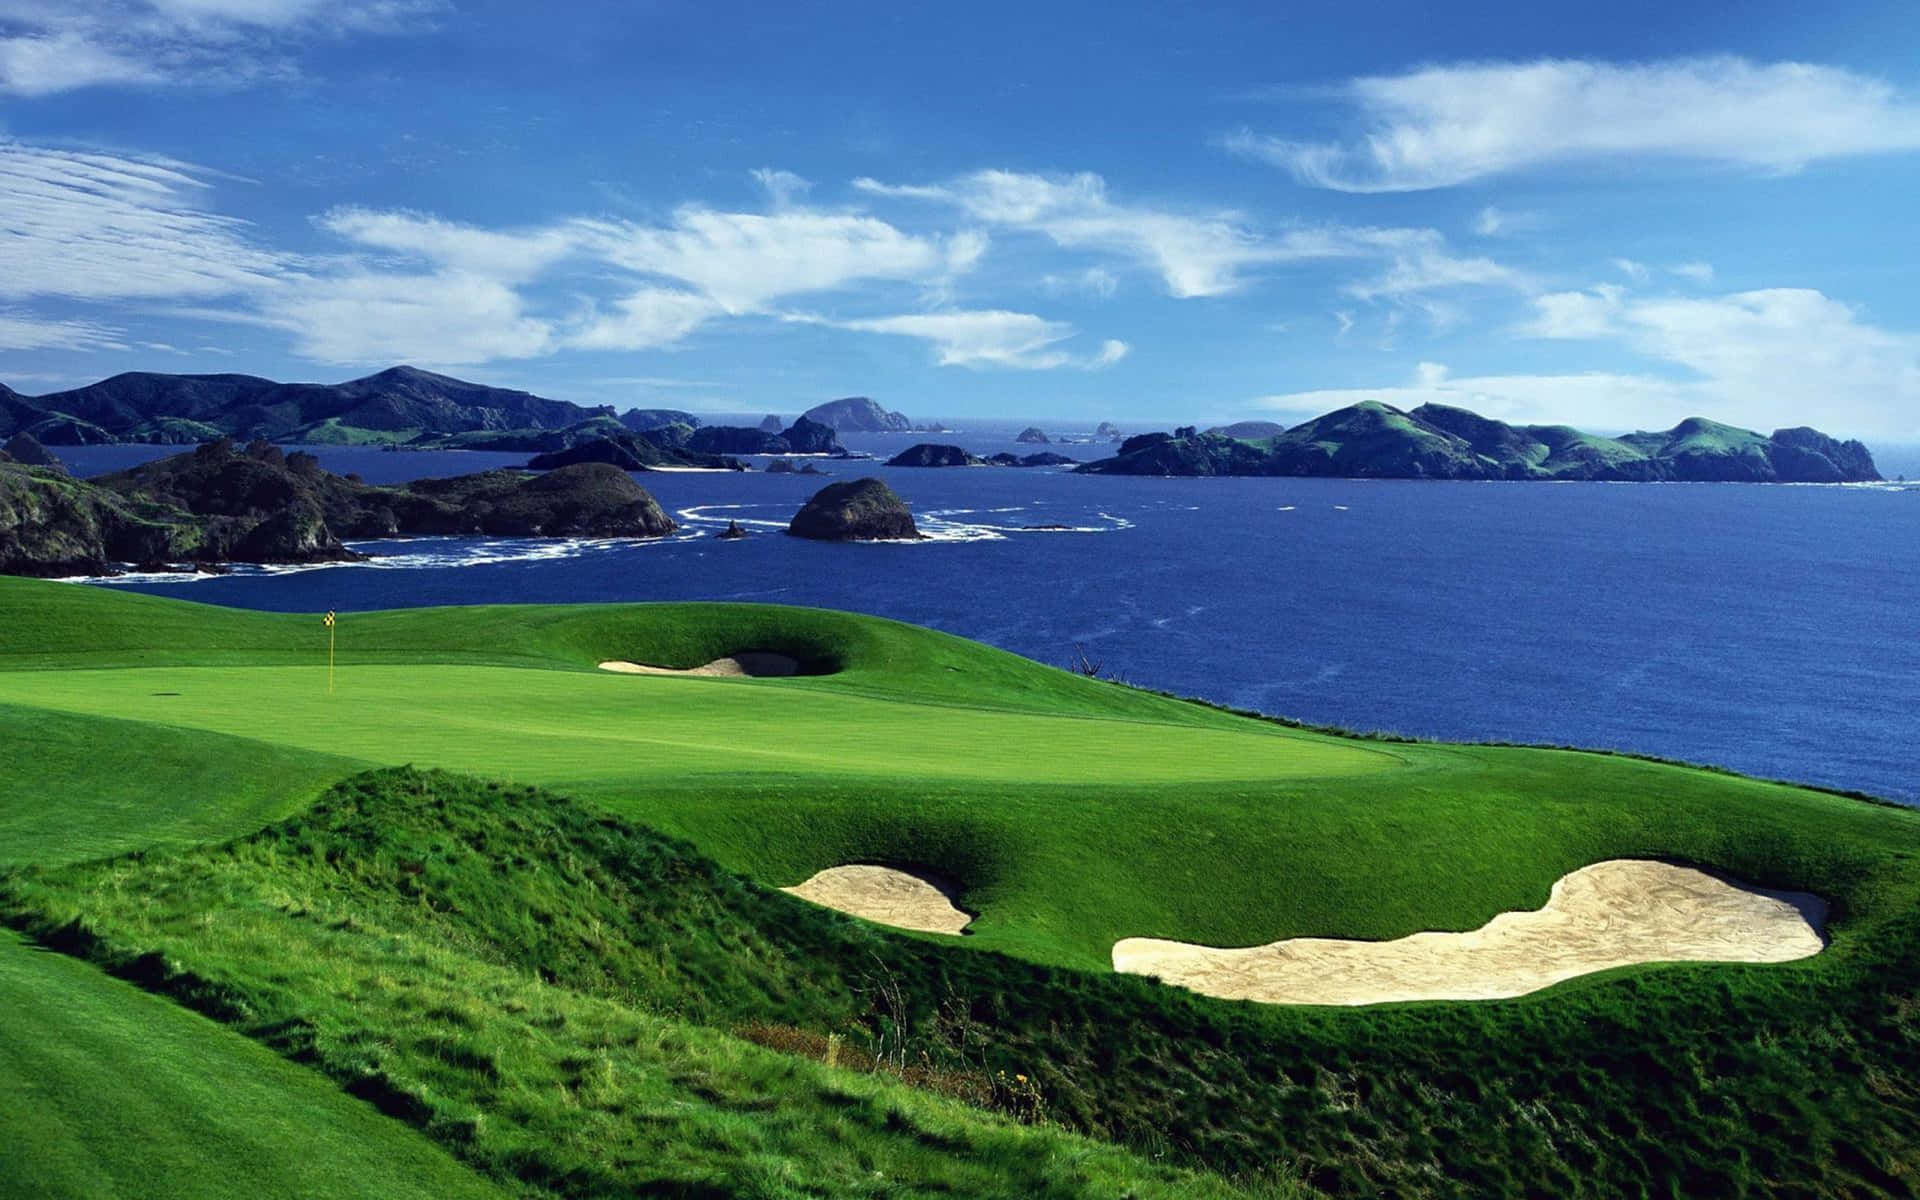 Scenic 4K Golf Course Panorama